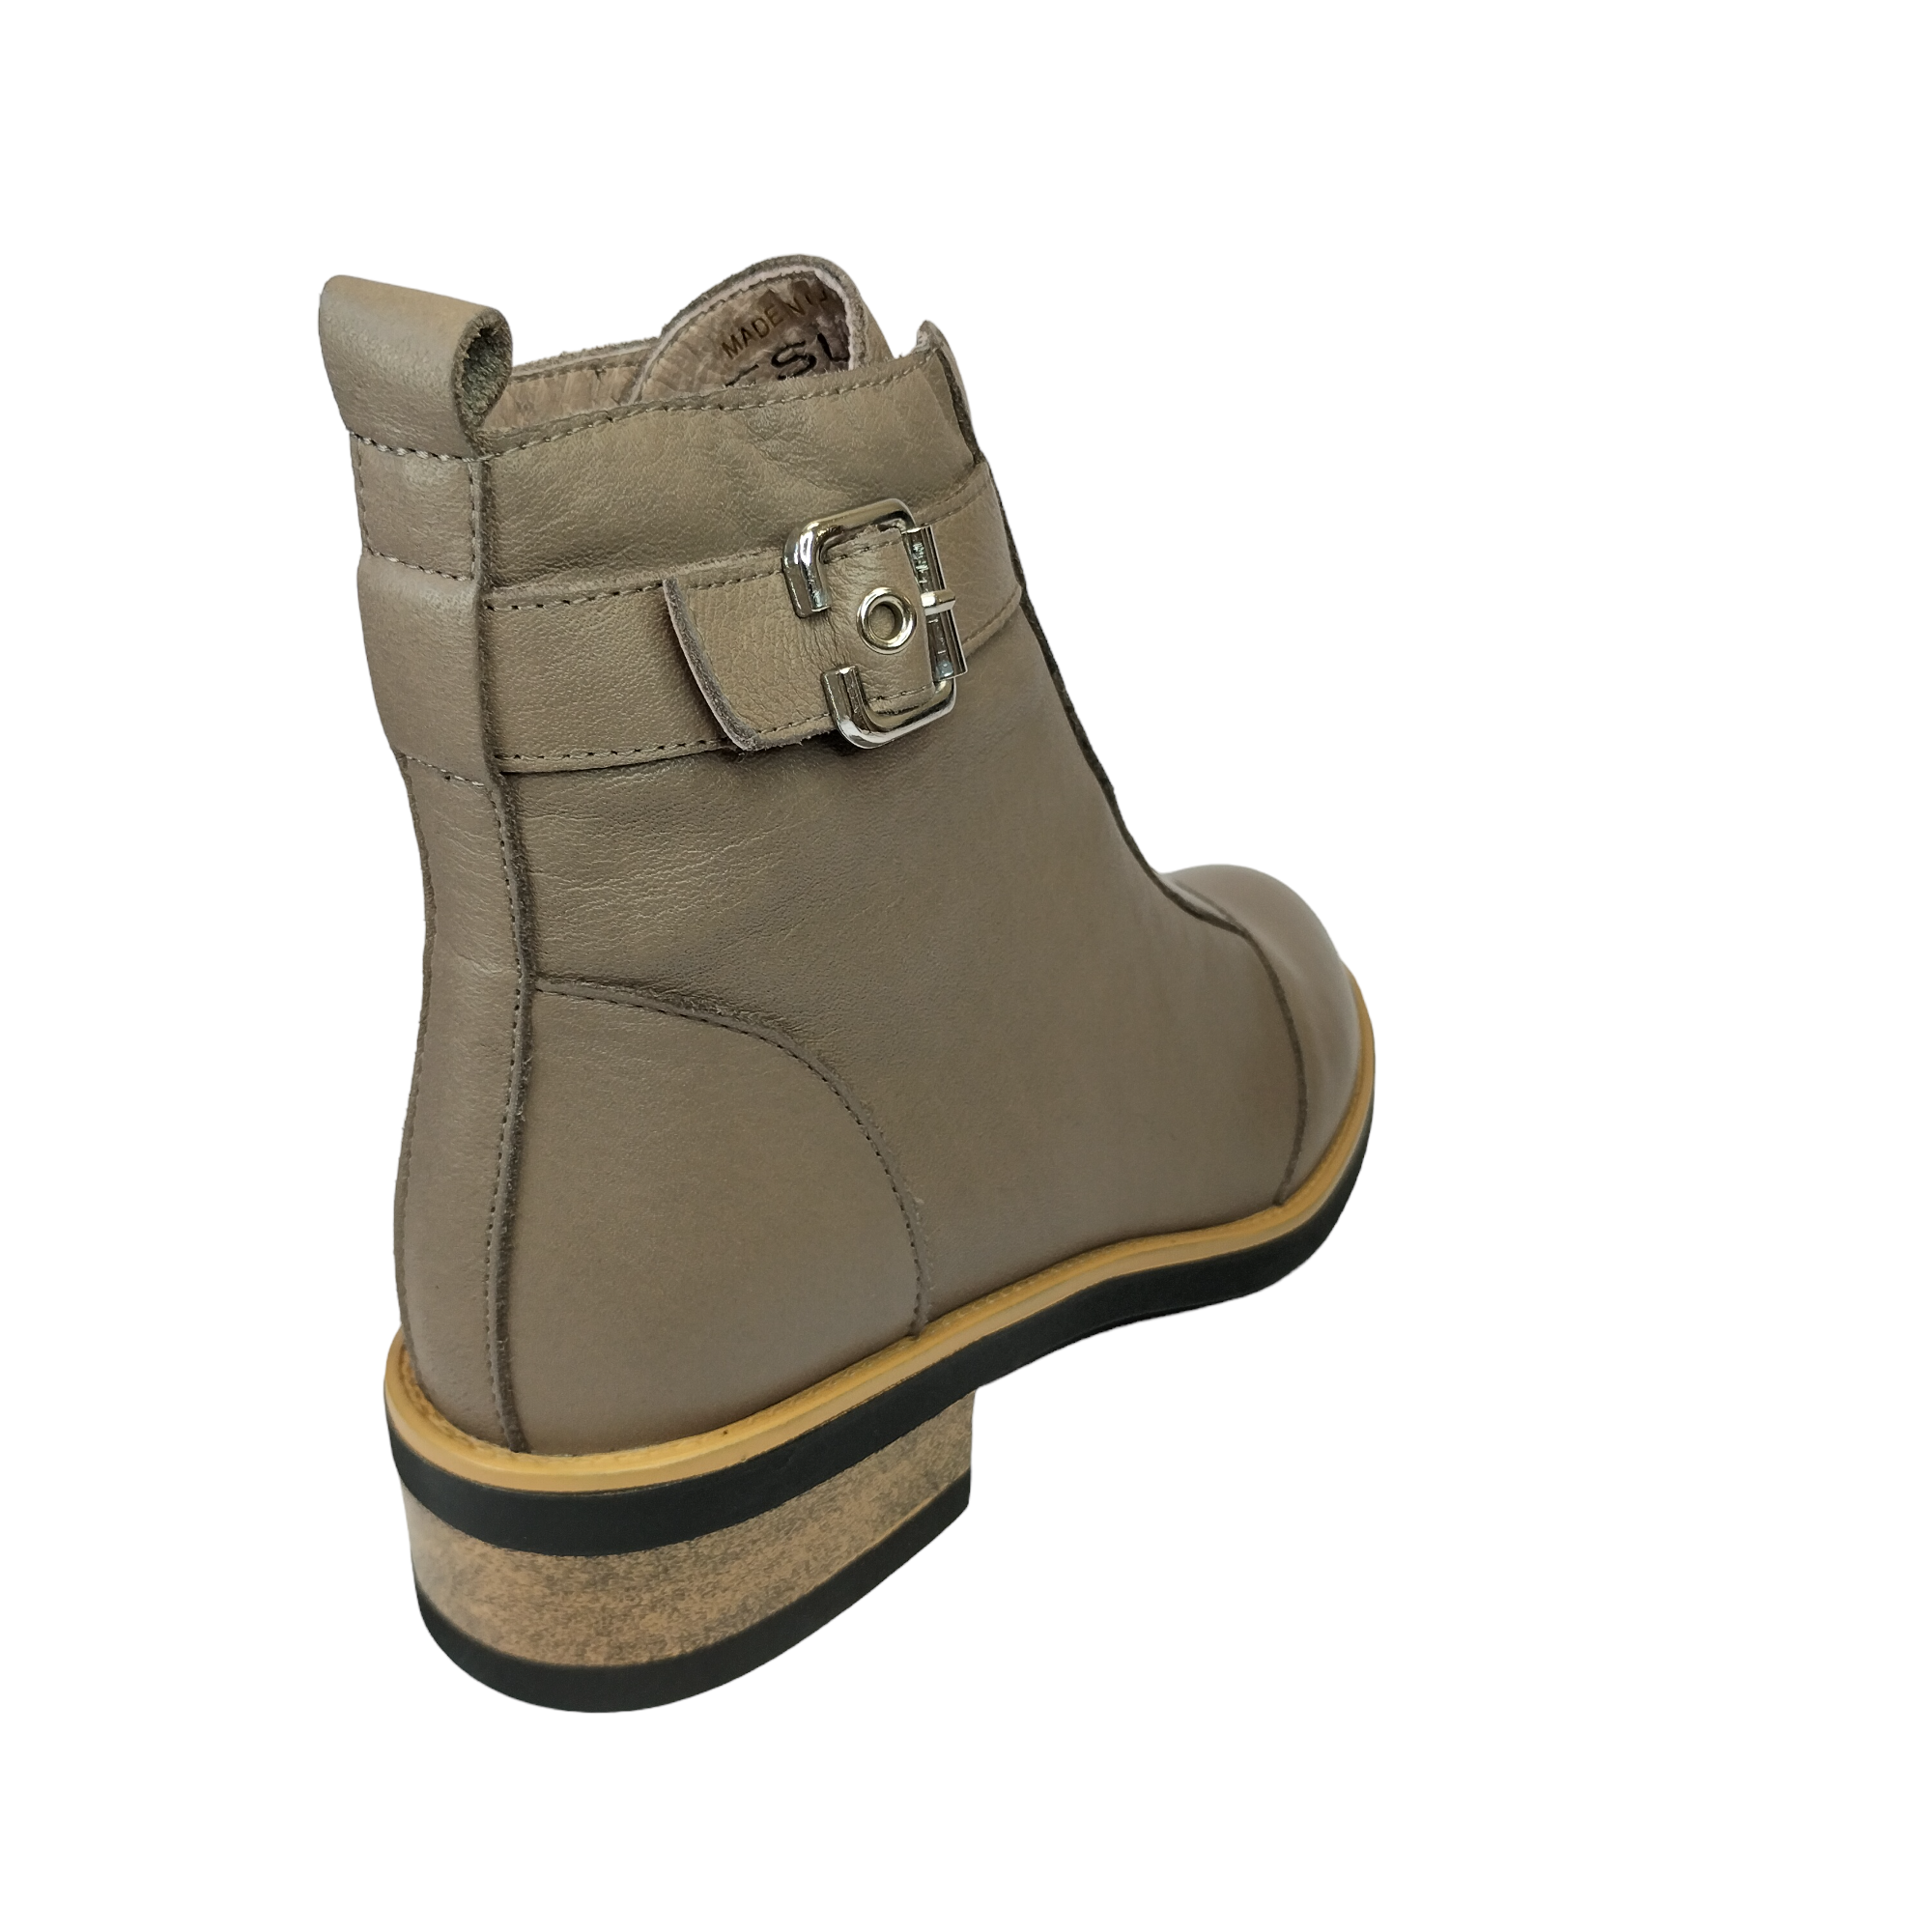 Dooley - shoe&amp;me - Bresley - Boot - Boots, Winter, Womens